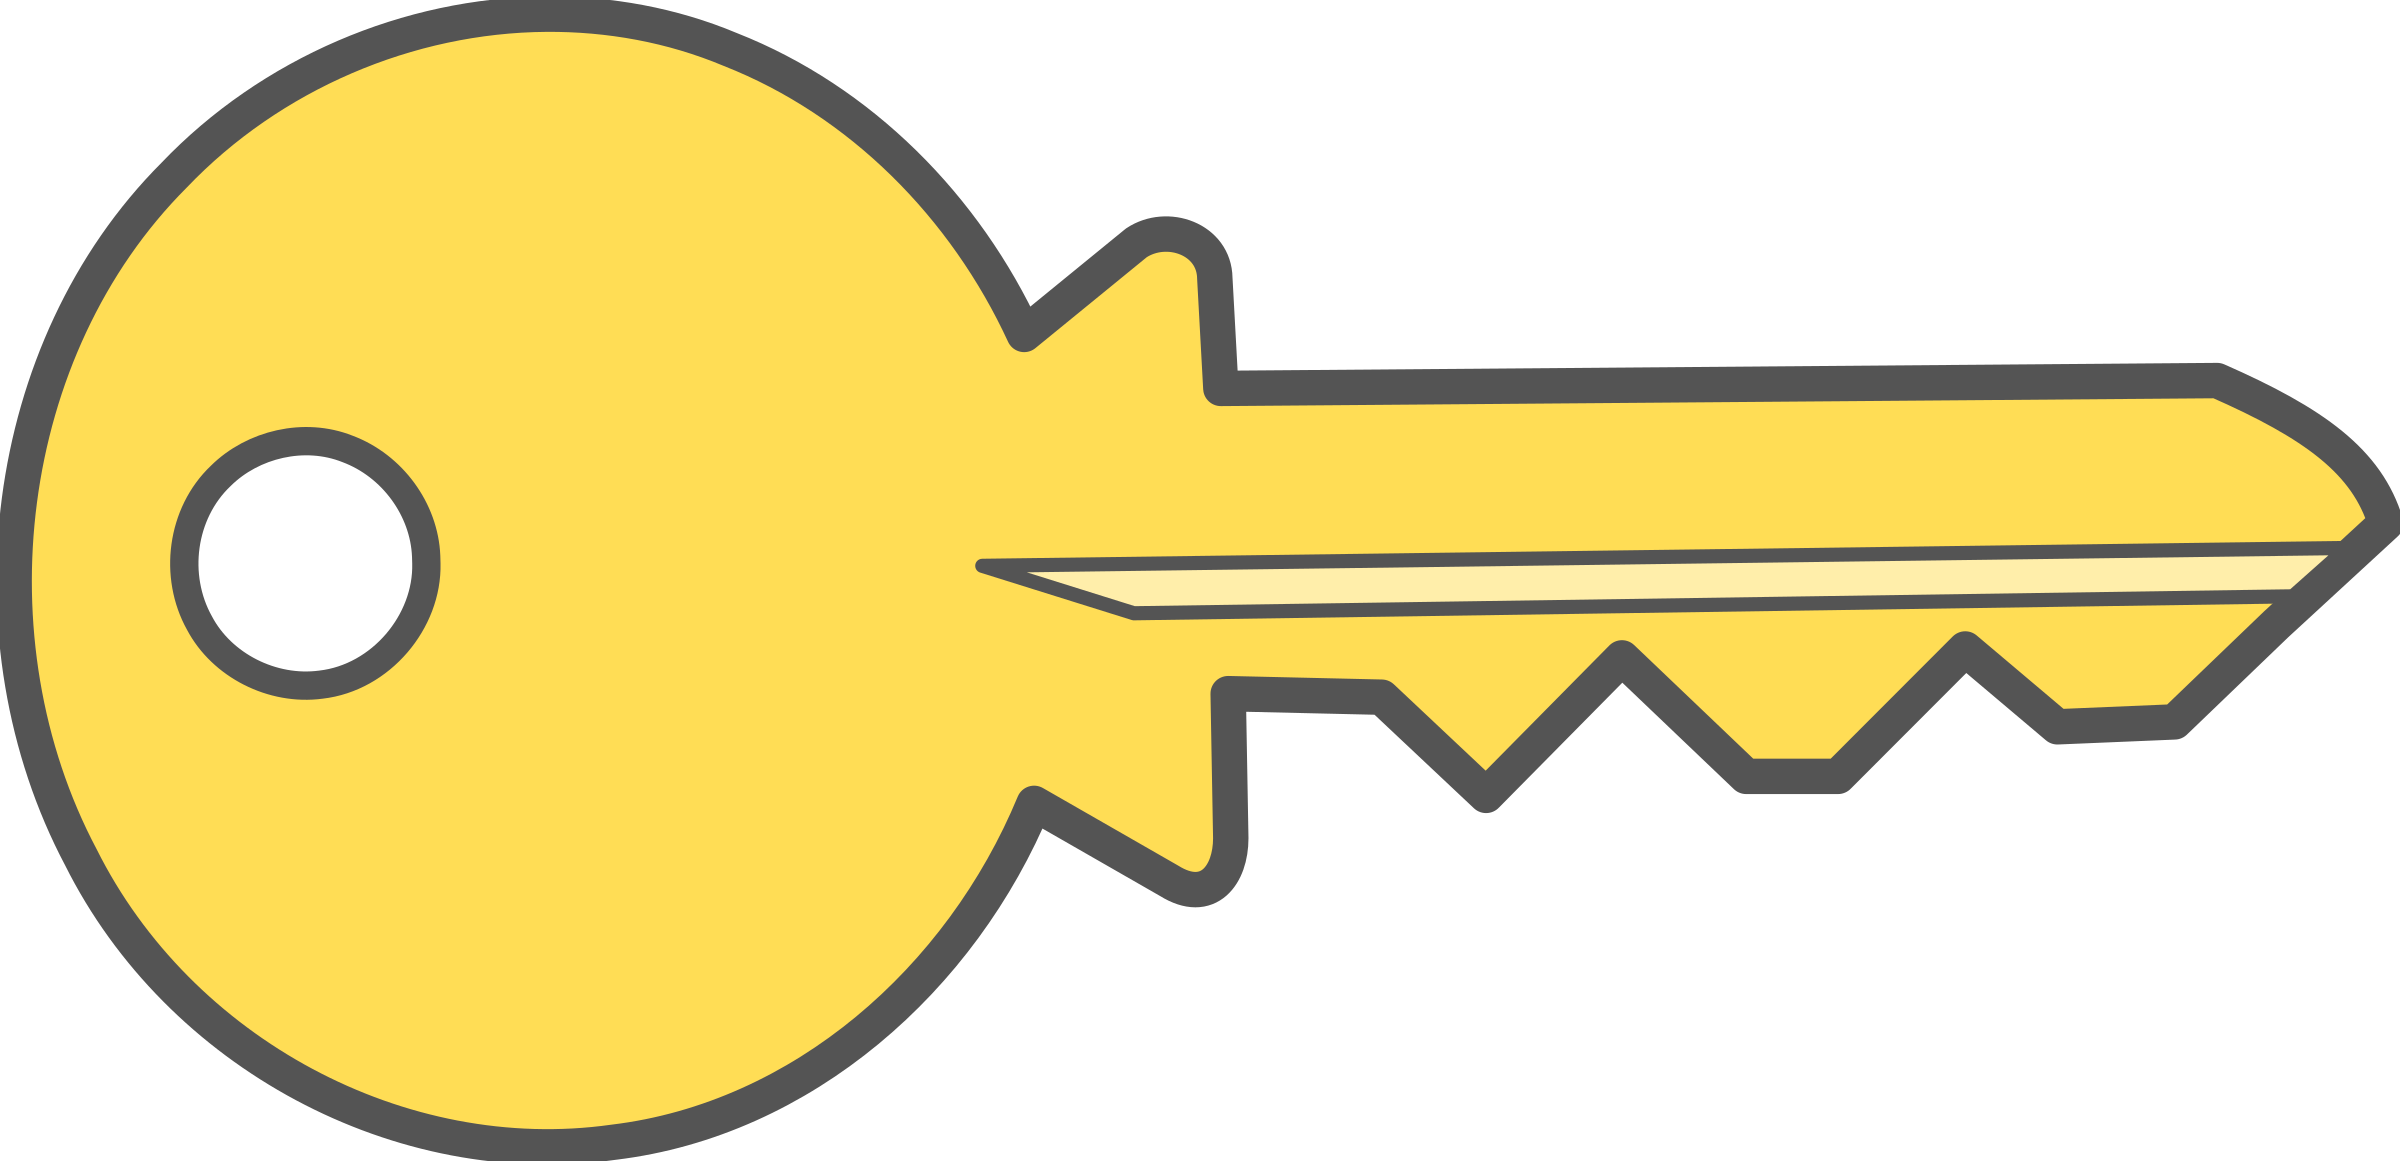 key clipart - Clip Art Library